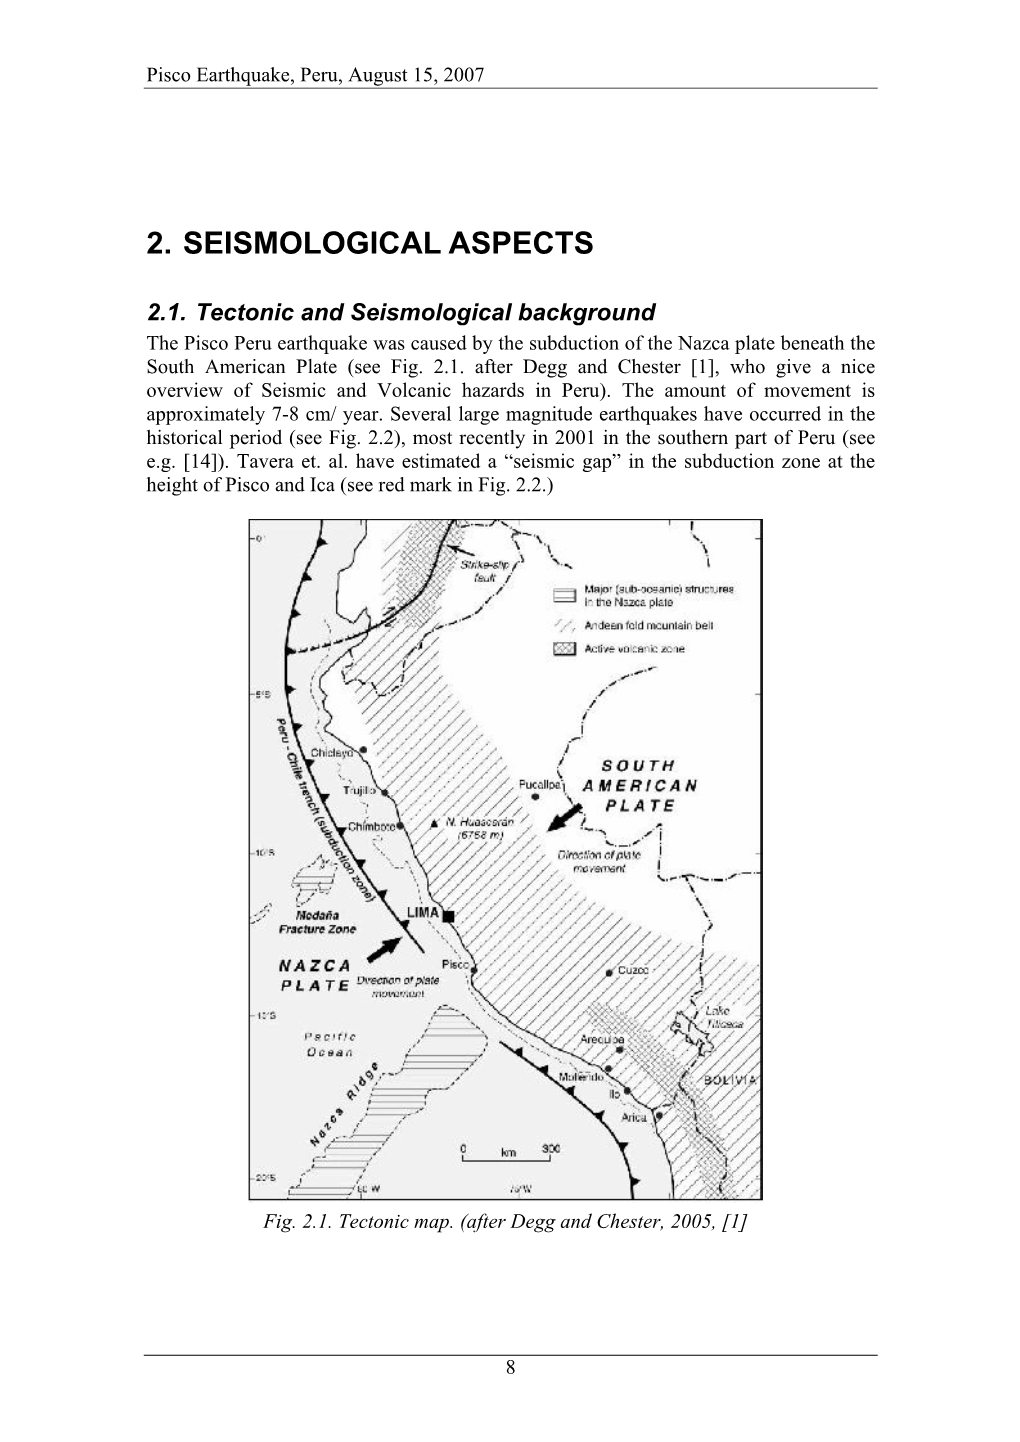 2. Seismological Aspects